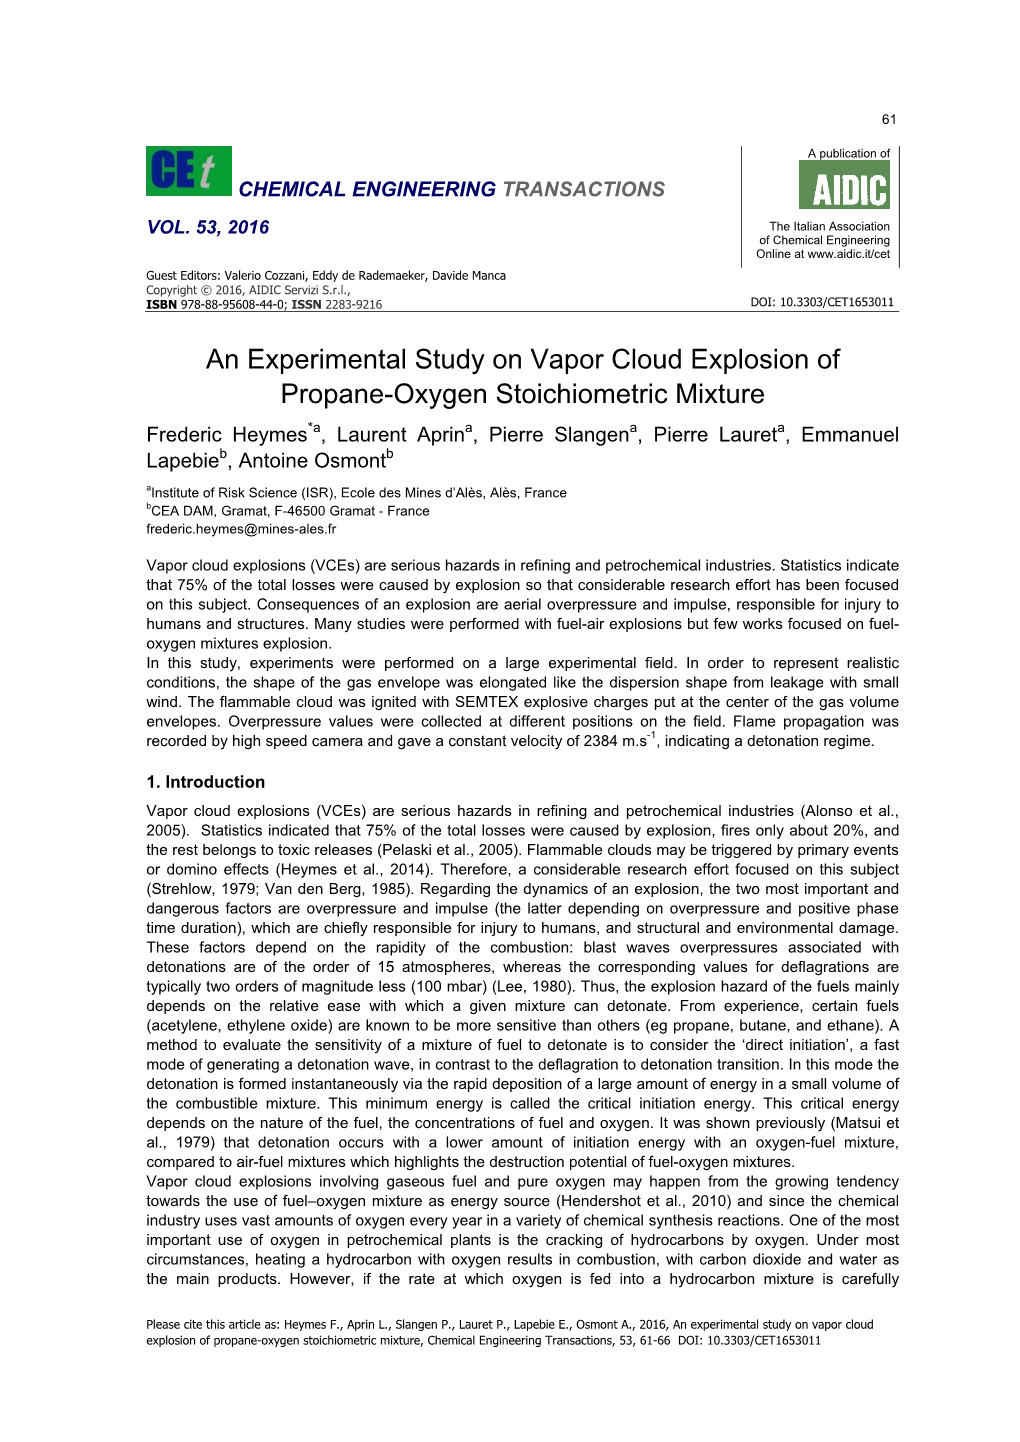 An Experimental Study on Vapor Cloud Explosion of Propane